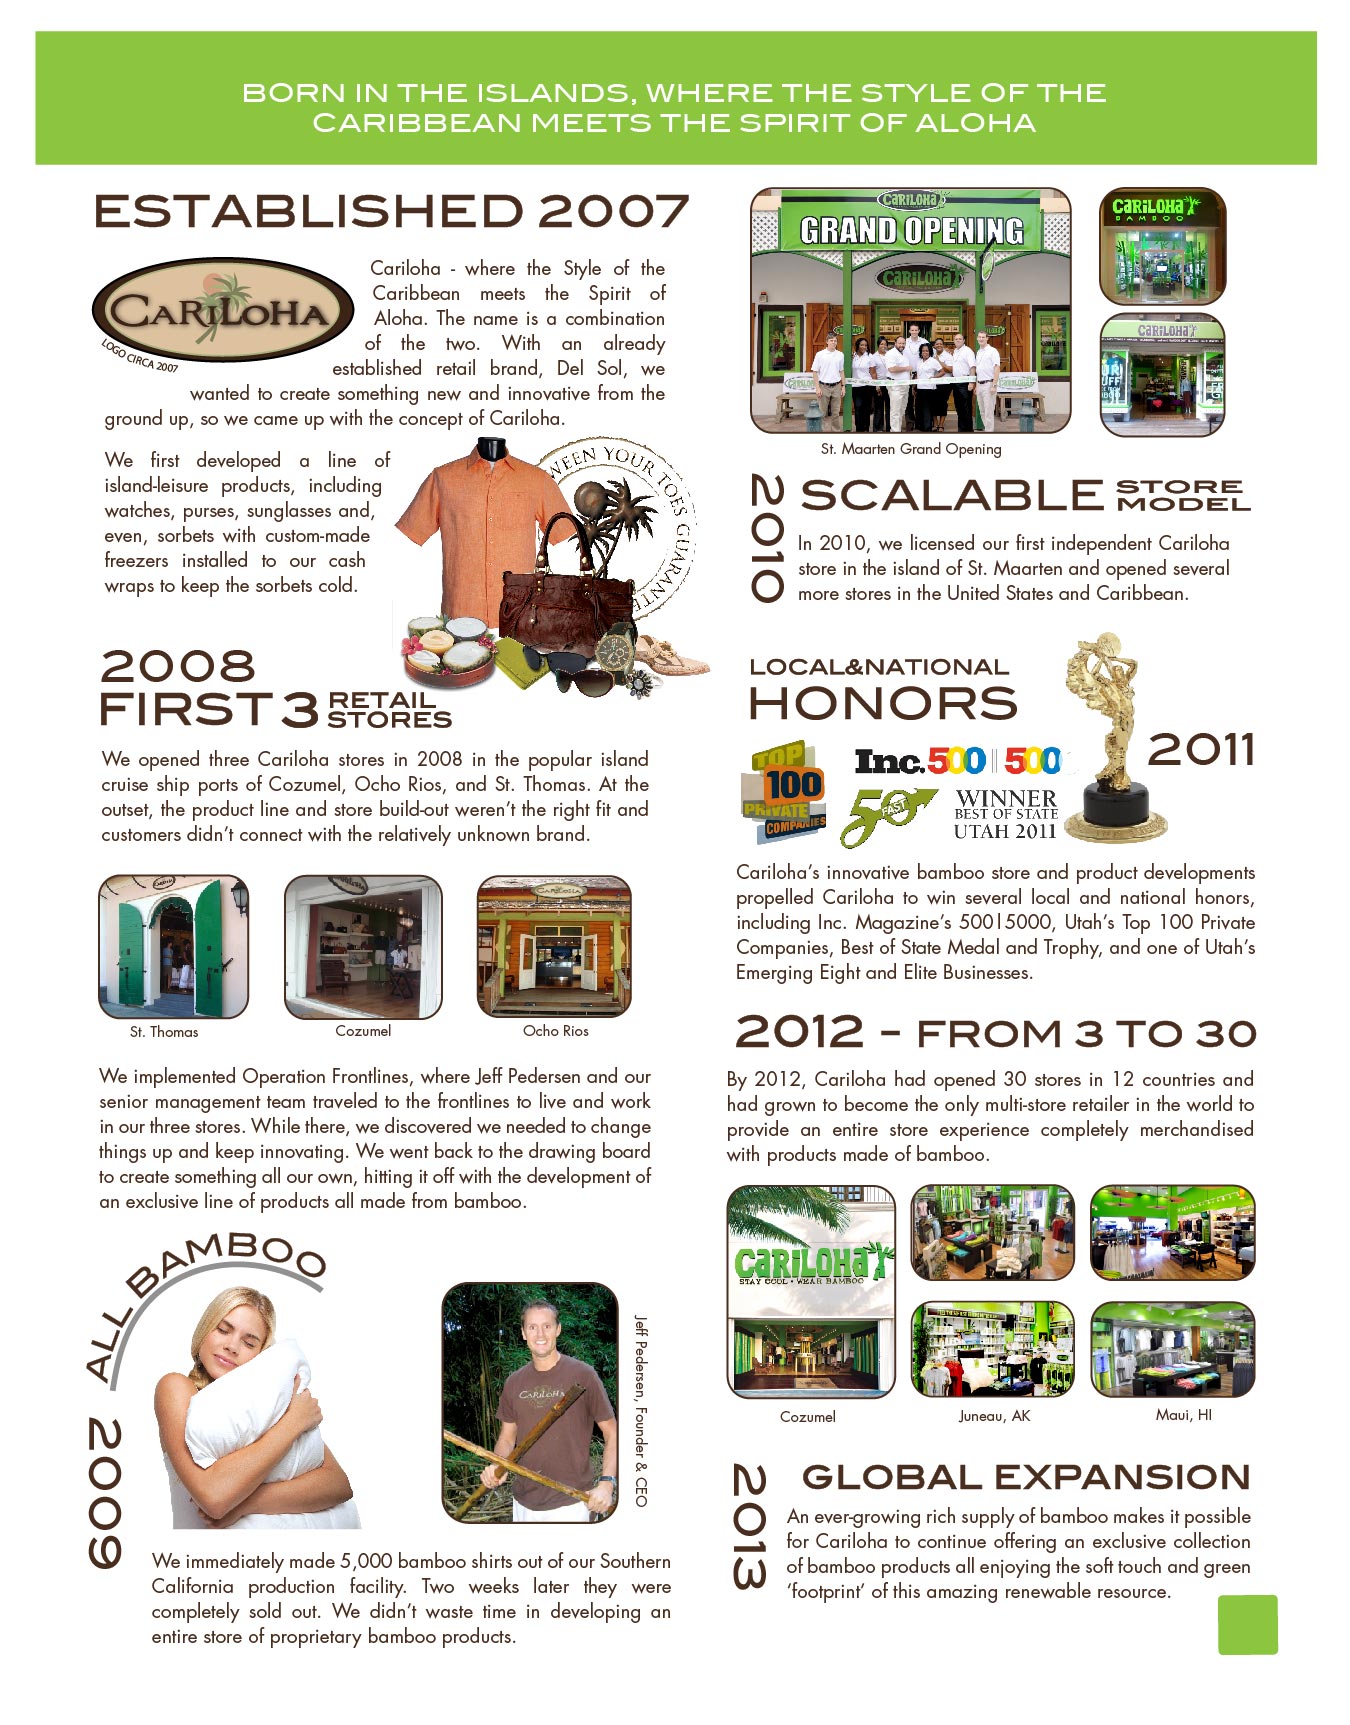 Cariloha History Timeline  2007 - Present